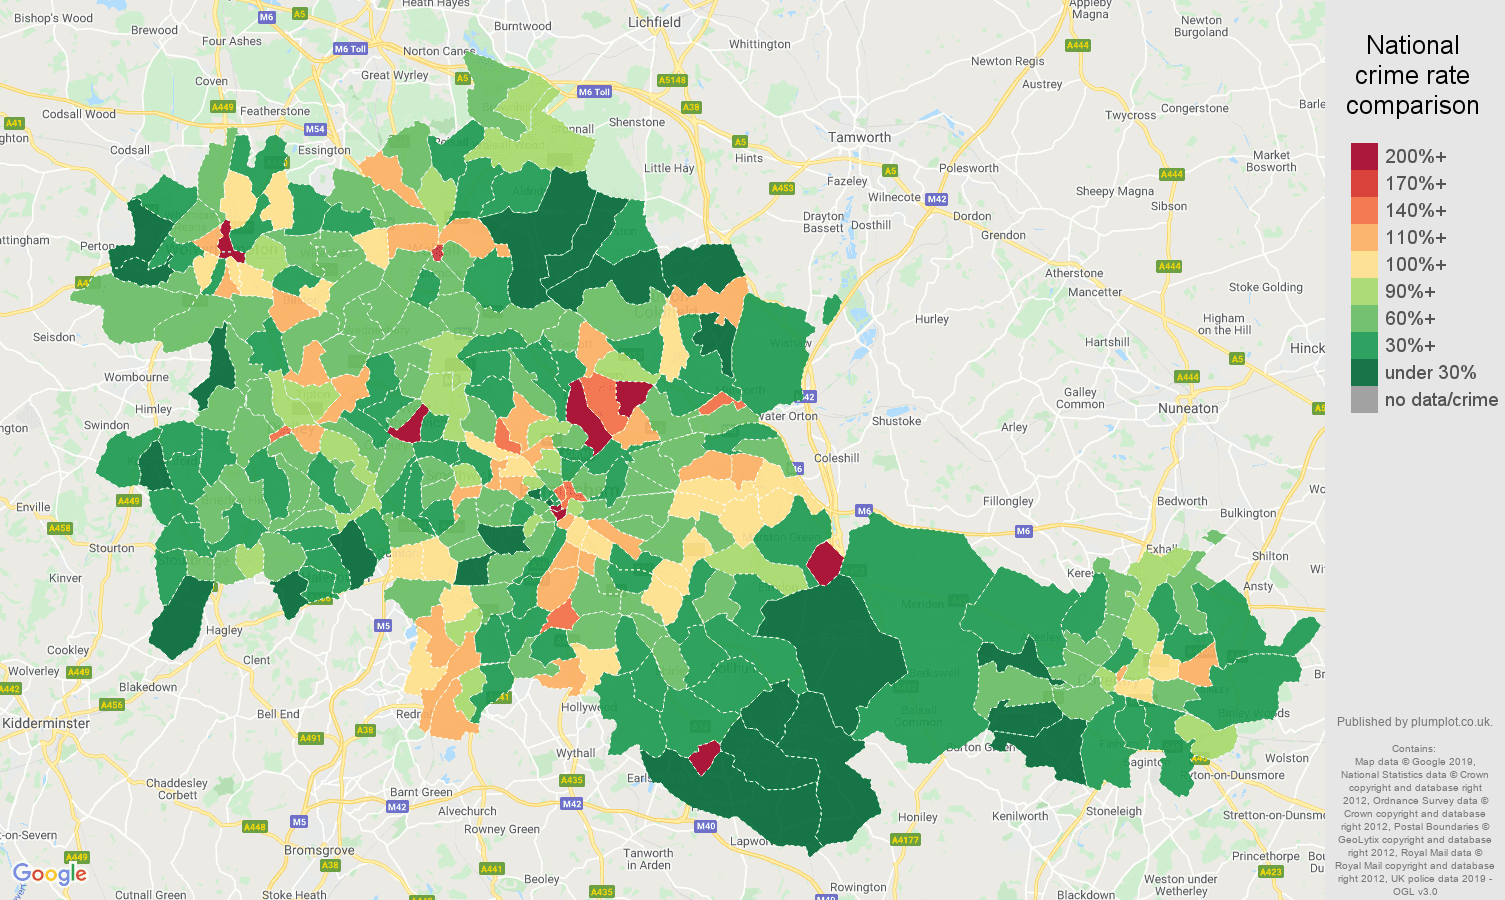 West Midlands county public order crime rate comparison map